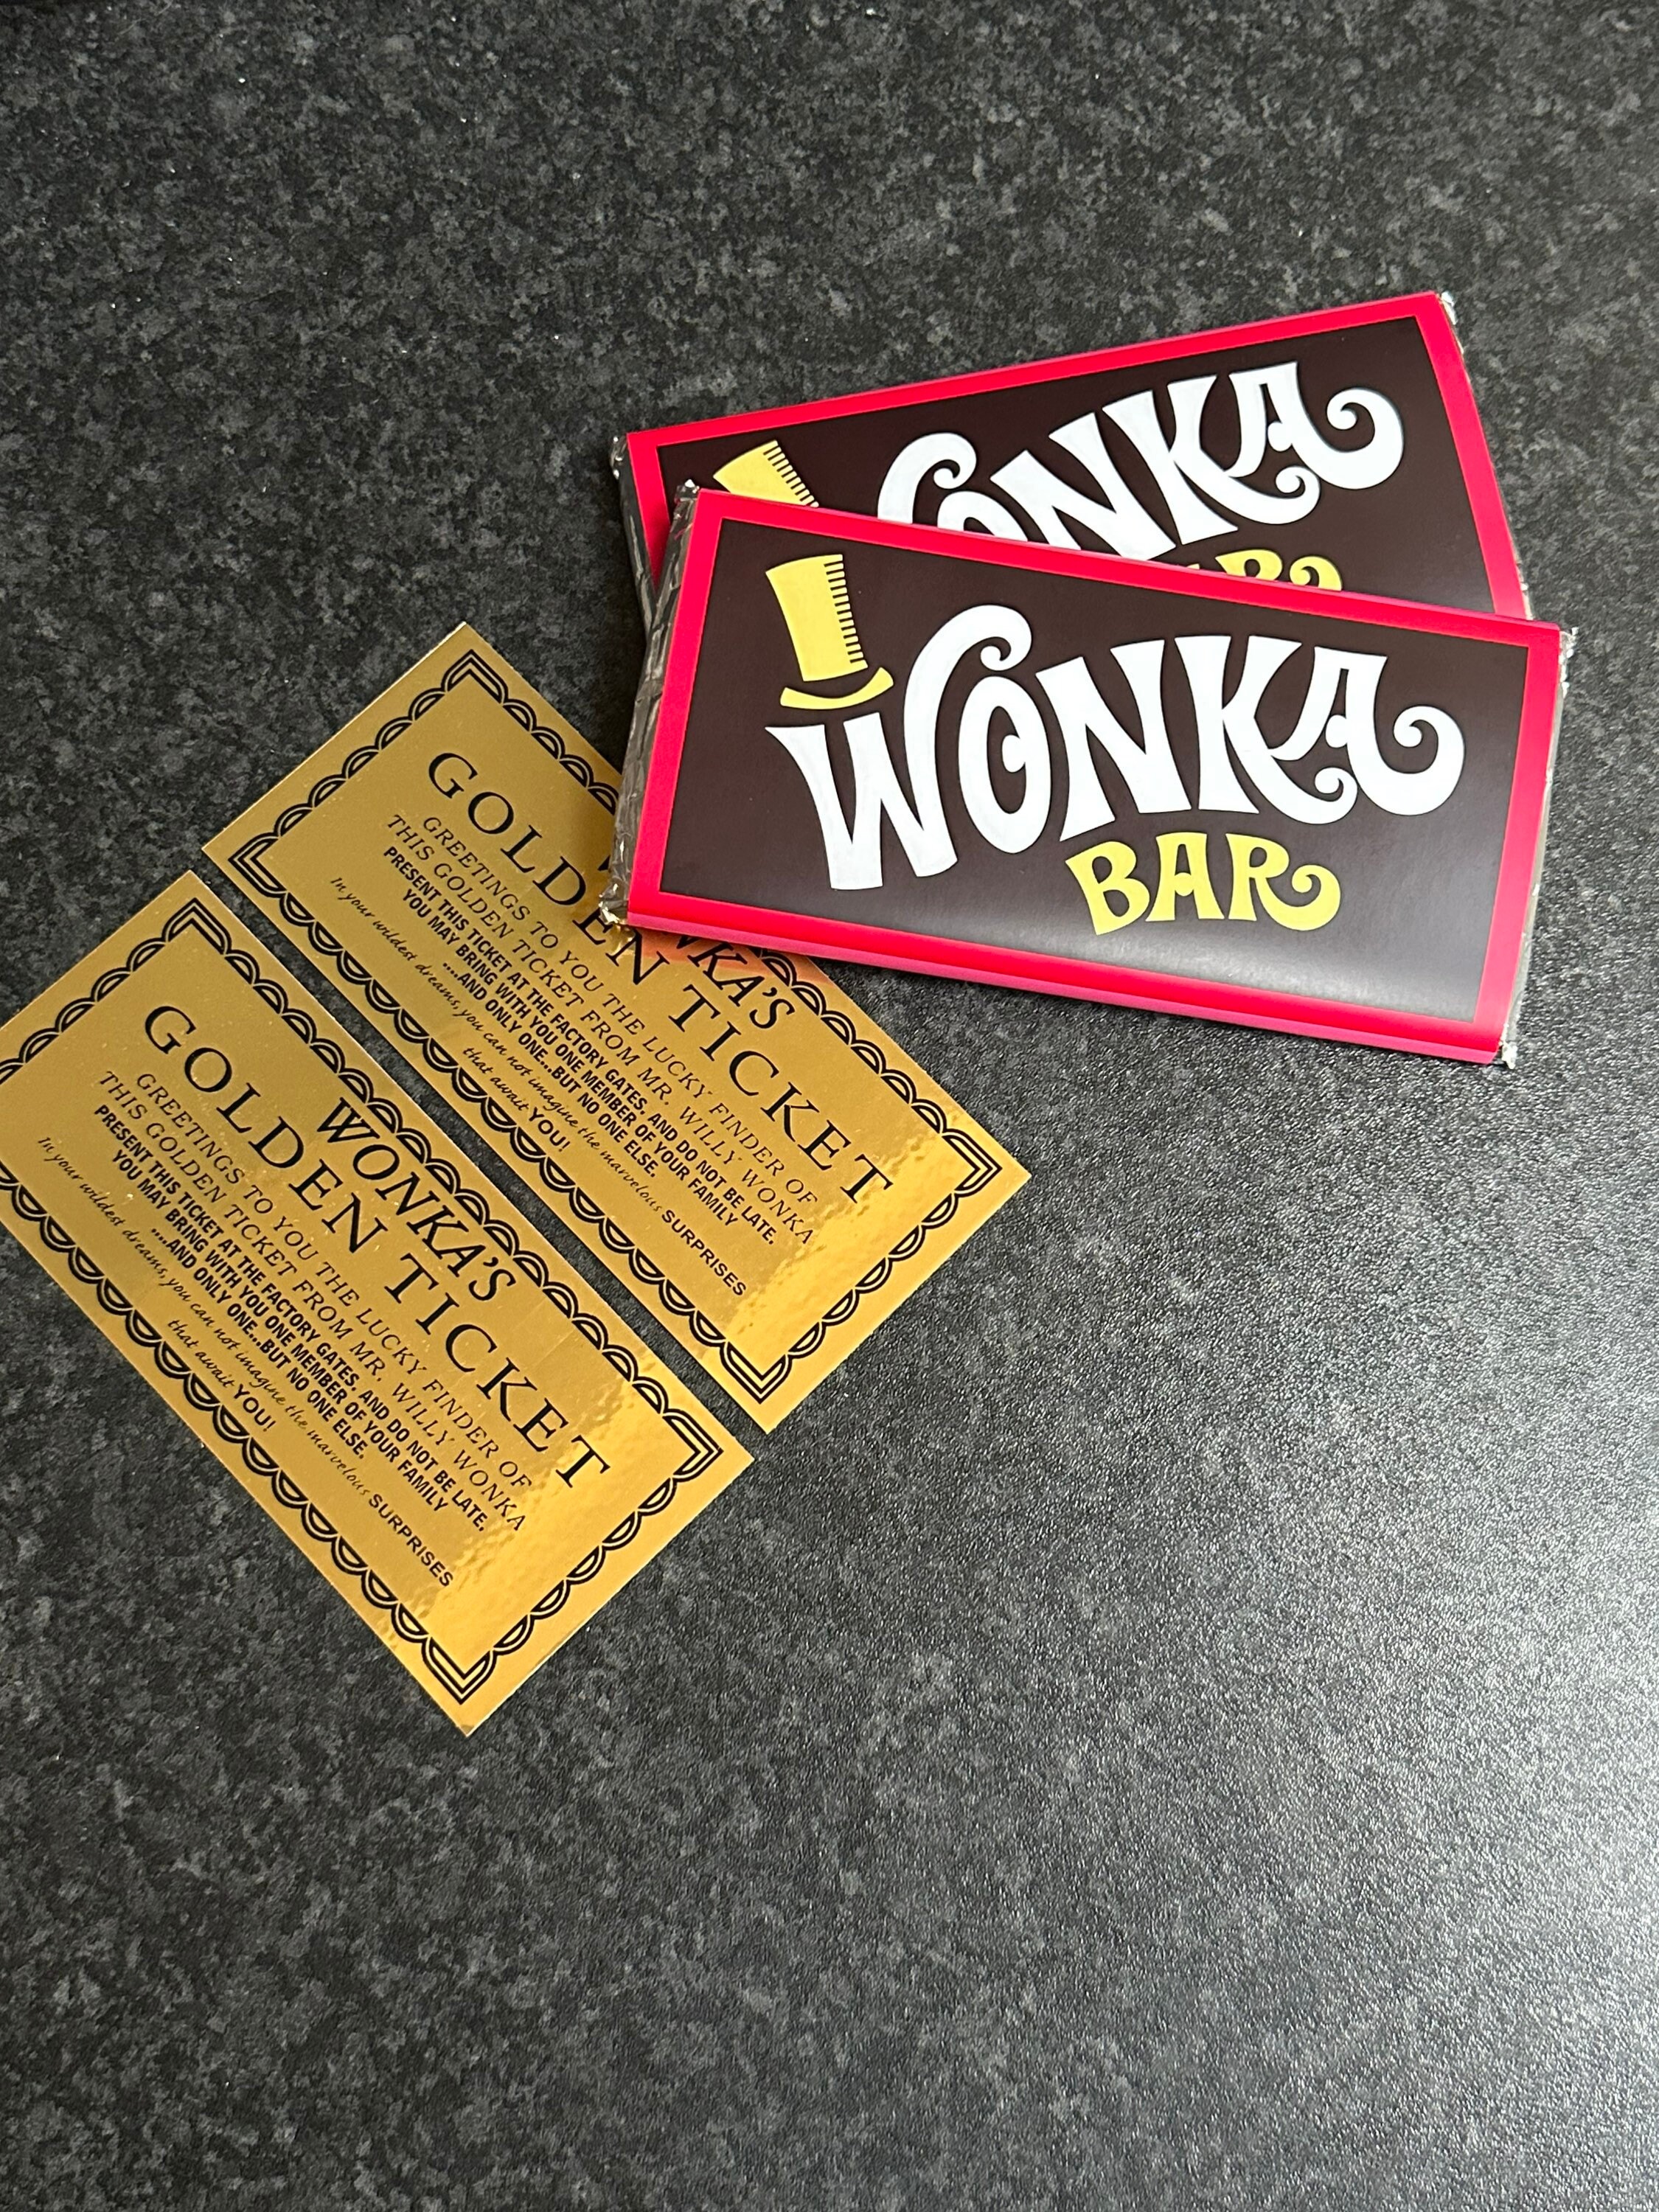 Willy Wonka 100g Chocolate Bar LARGE ! Gift Novelty Golden Ticket 1971 Best  Bar